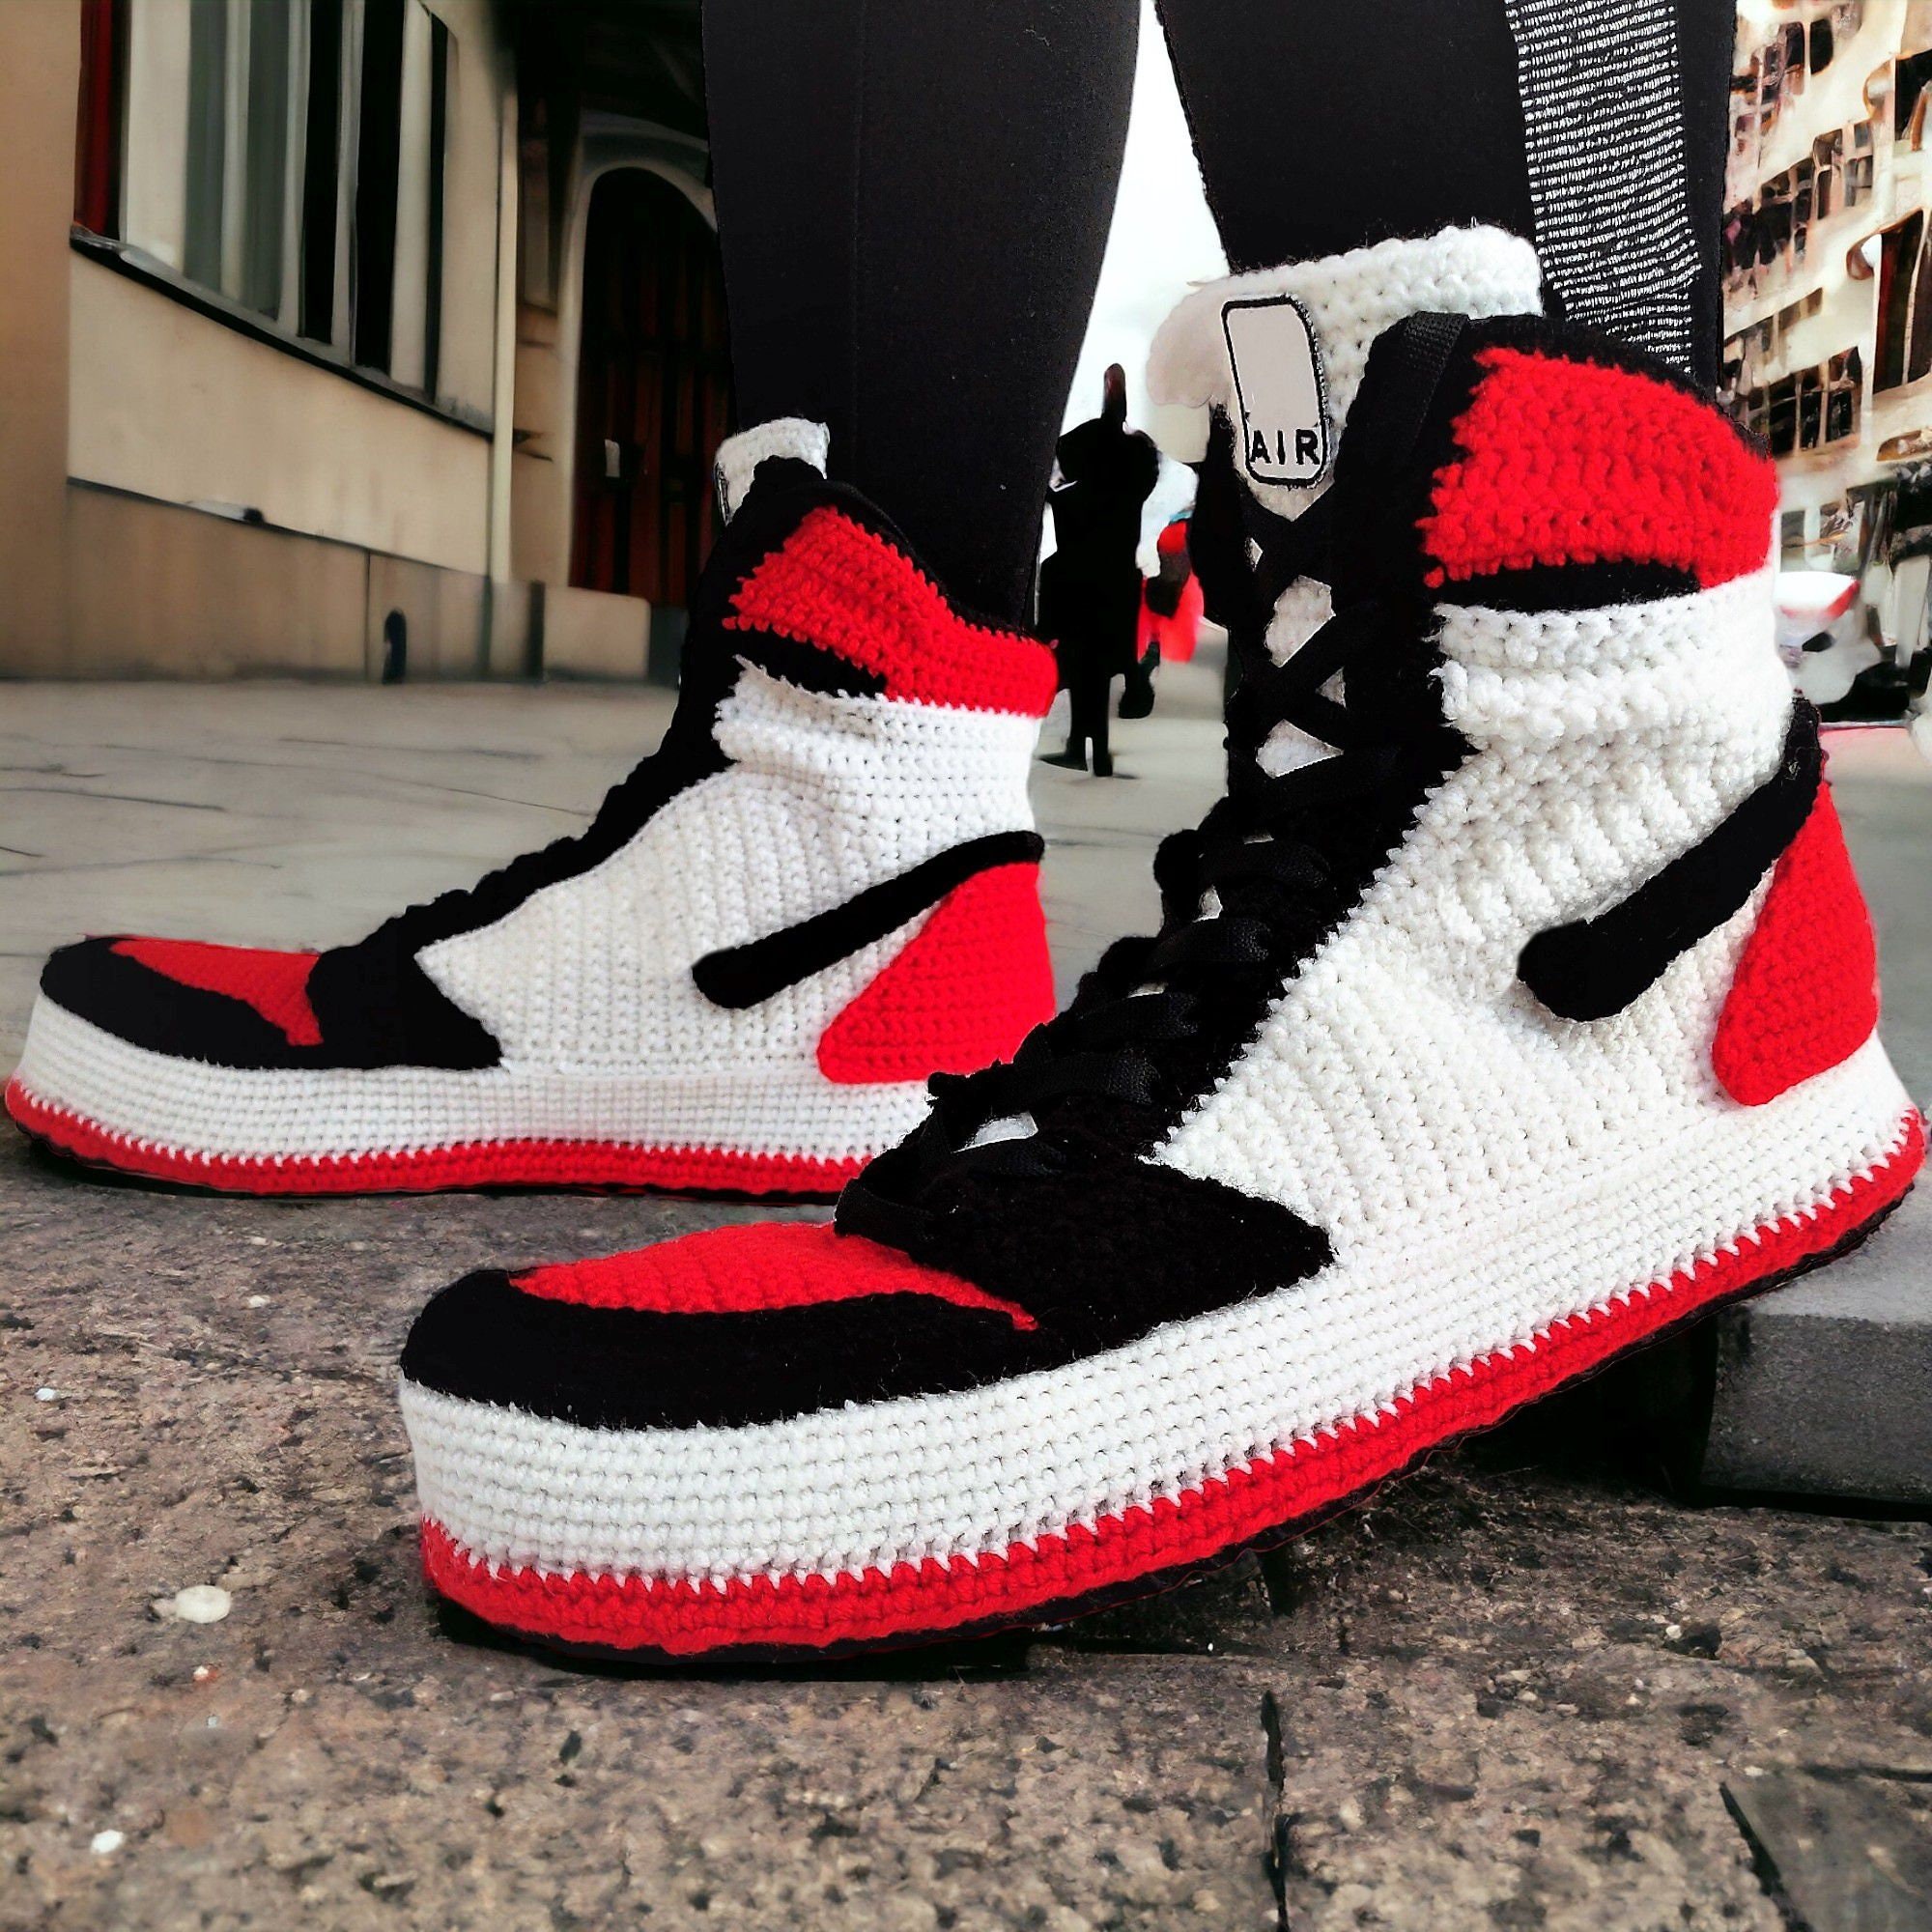 Buy KoziKickz Jordan Style Sneaker Slippers | Plush Ultra Comfy | Non-Slip  Sole | Unisex - One Size Fits Most | AJ1 Bred(Red Black) at Amazon.in